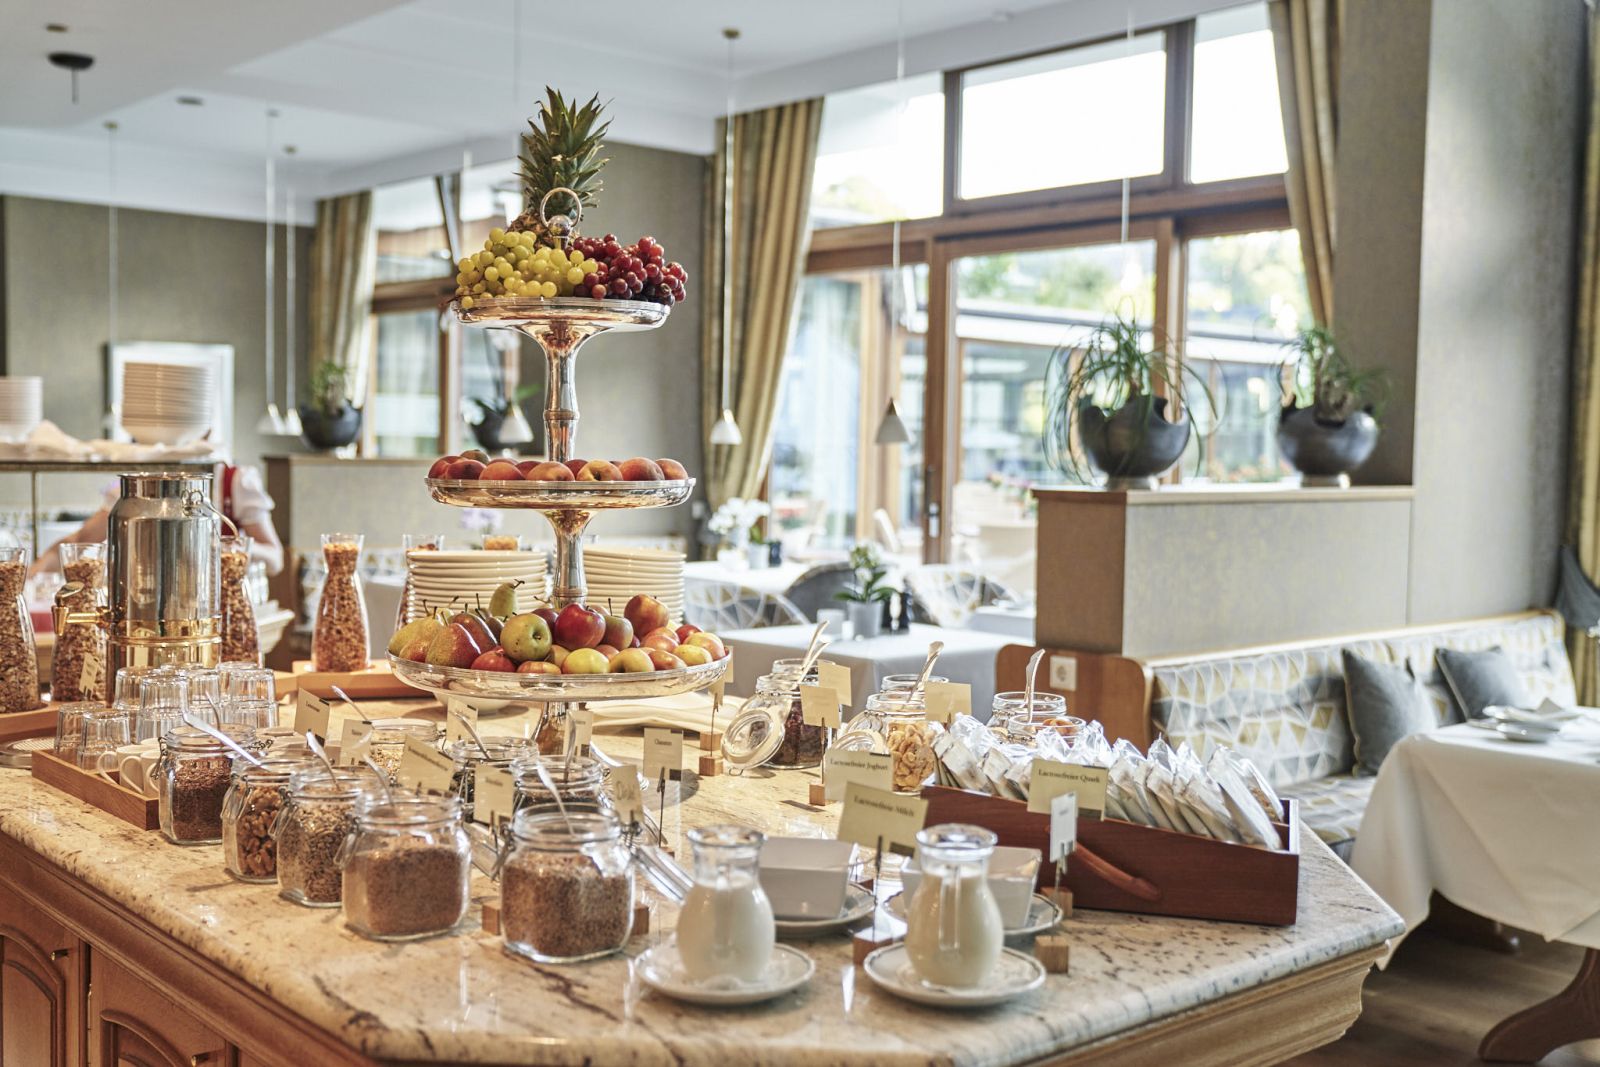 Muesli selection and fruit tartar - Breakfast buffet Hotel Deimann